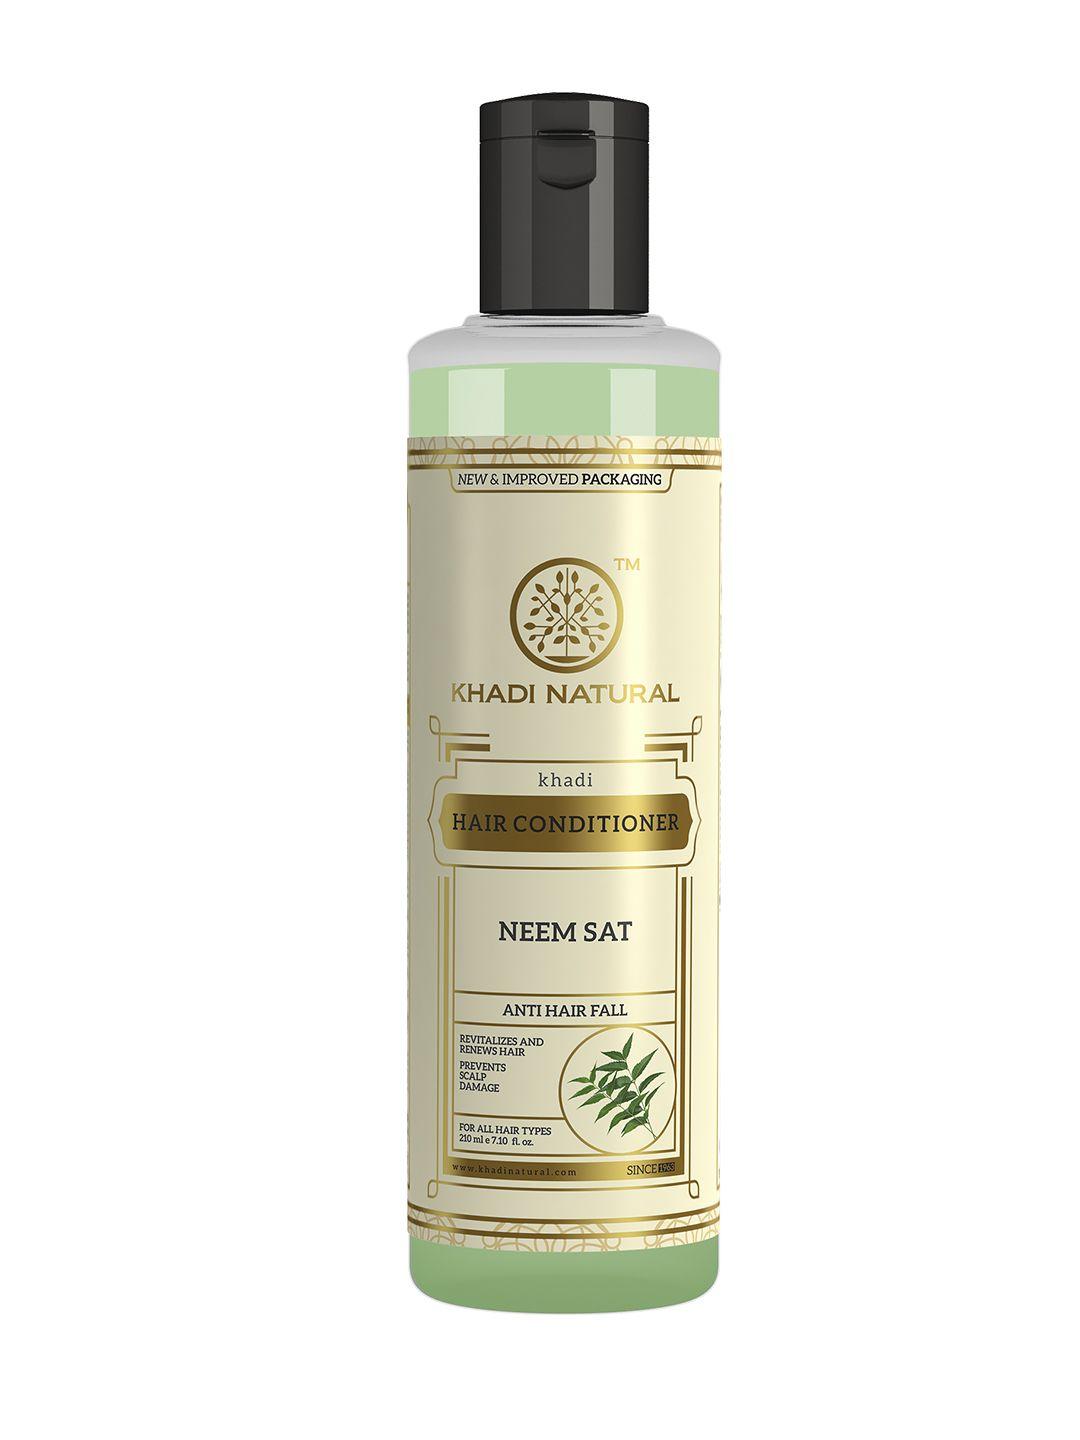 khadi natural neem sat hair conditioner for anti-hair fall - 210ml